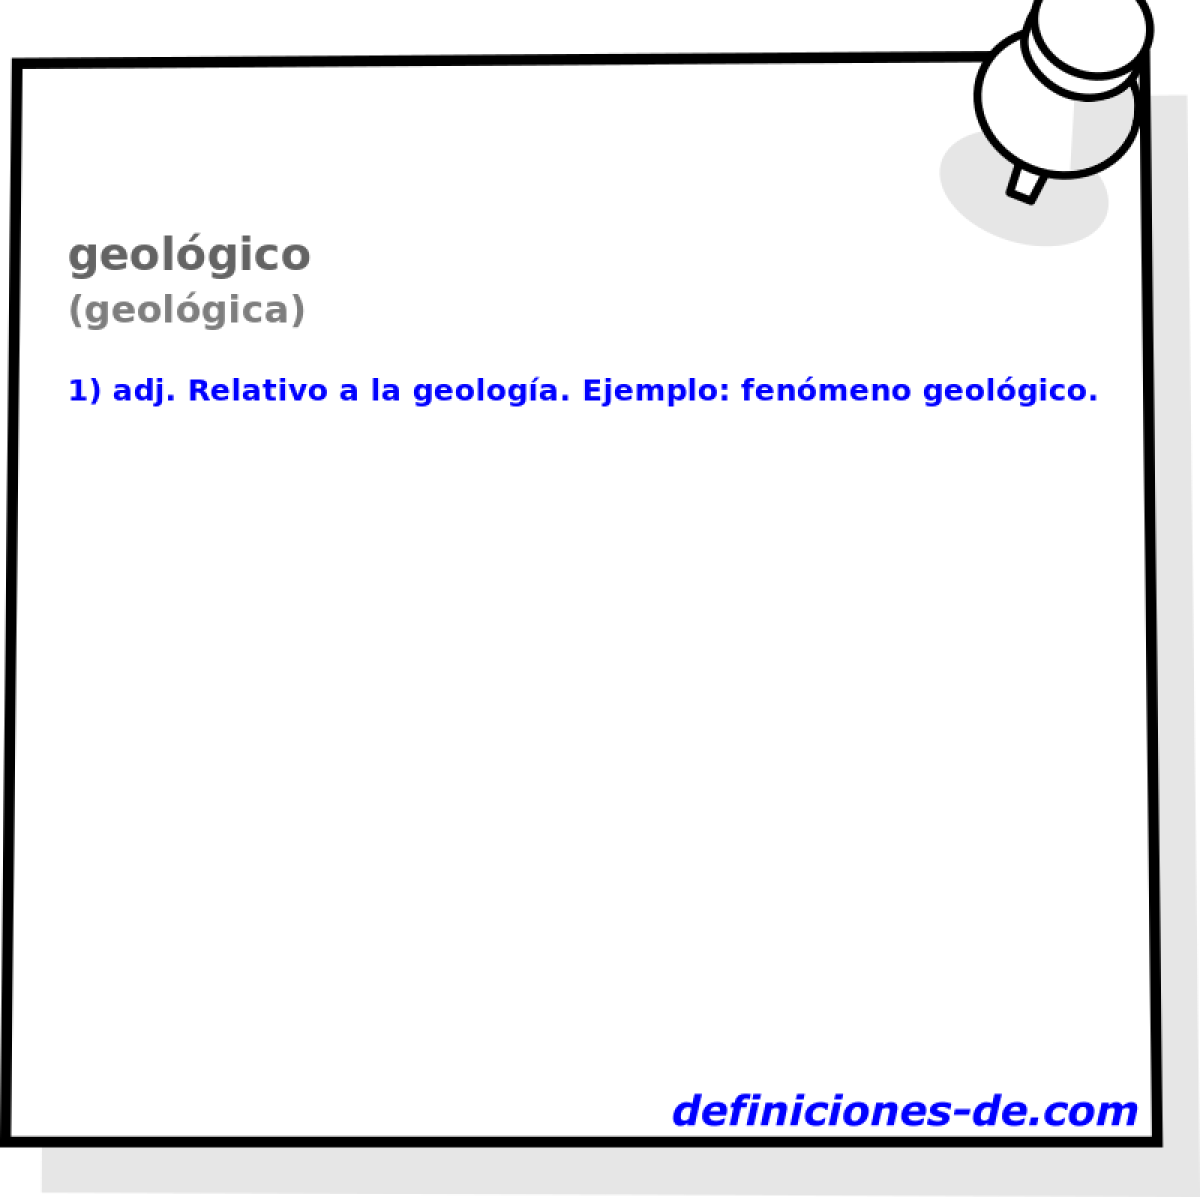 geolgico (geolgica)